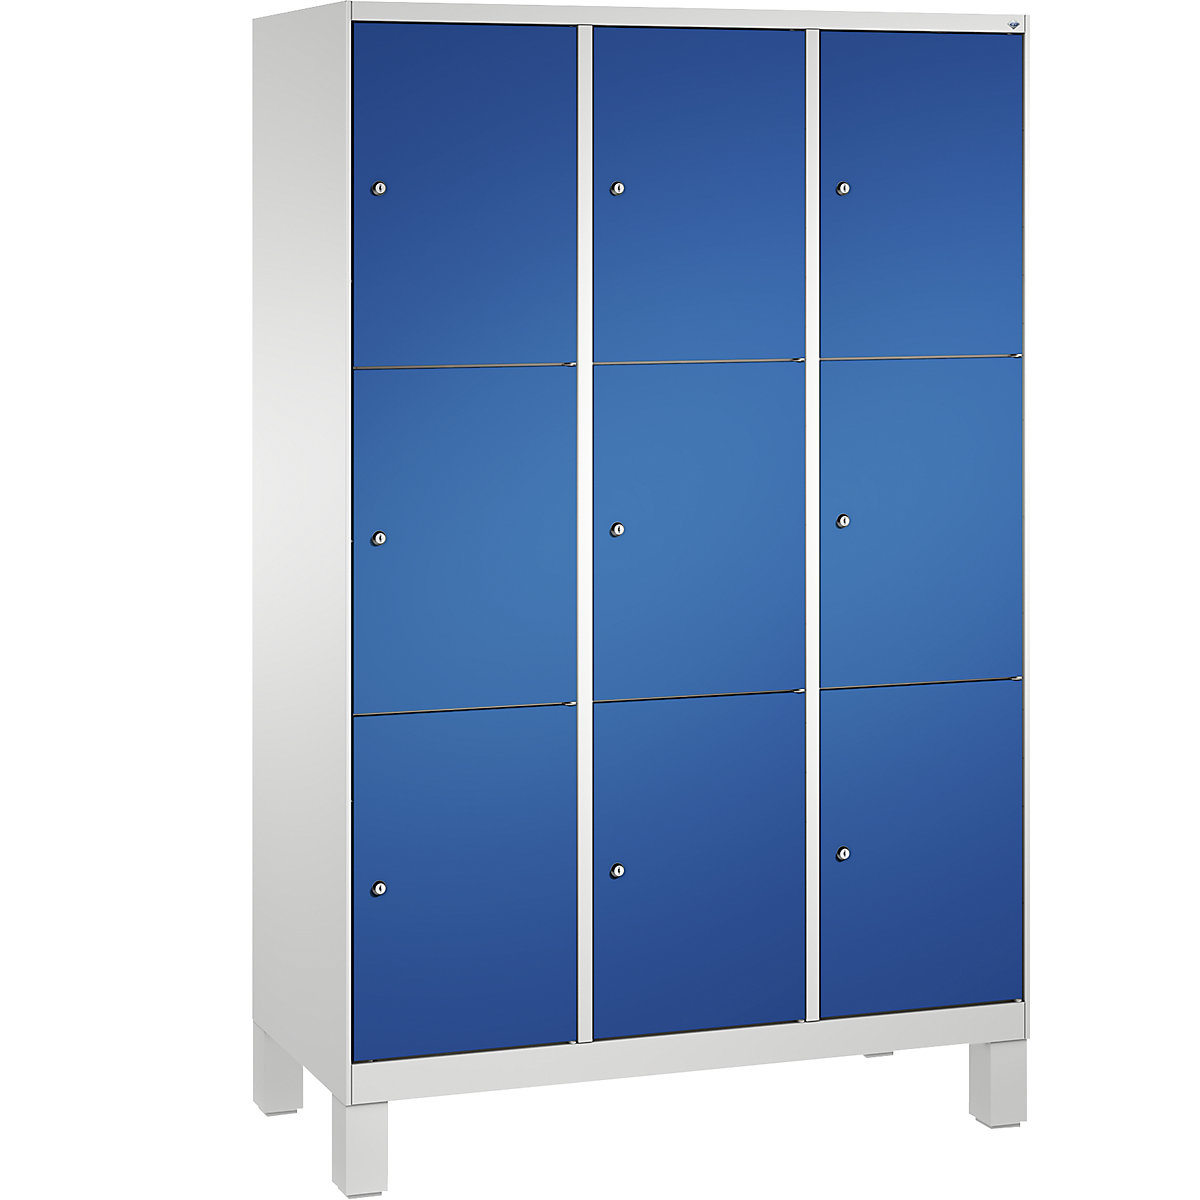 EVOLO locker unit, with feet – C+P, 3 compartments, 3 shelf compartments each, compartment width 400 mm, light grey / gentian blue-5